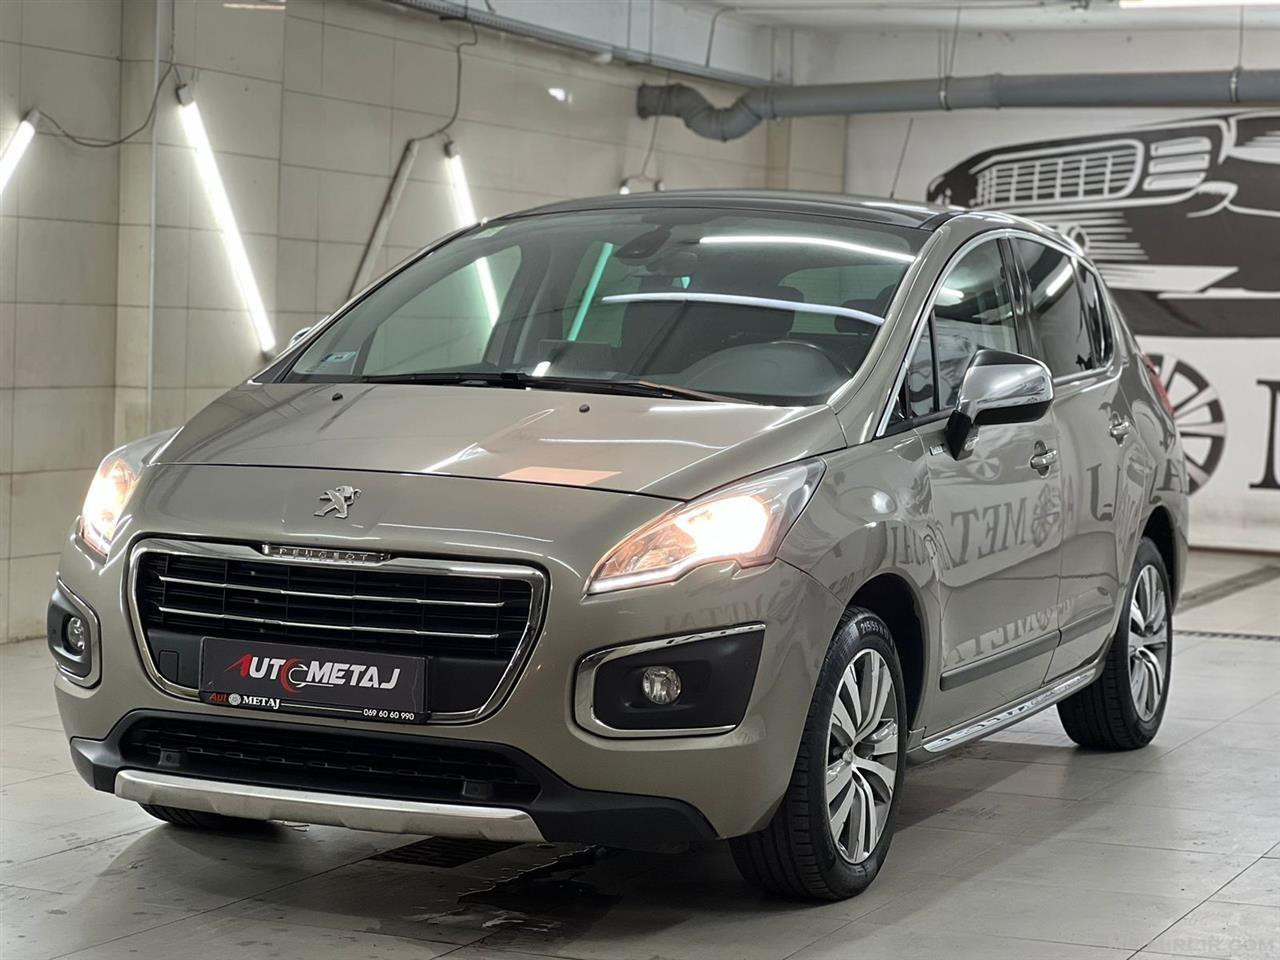  Peugeot 3008 Viti Prodhimit Fundi 2016  1.6 Diesel 